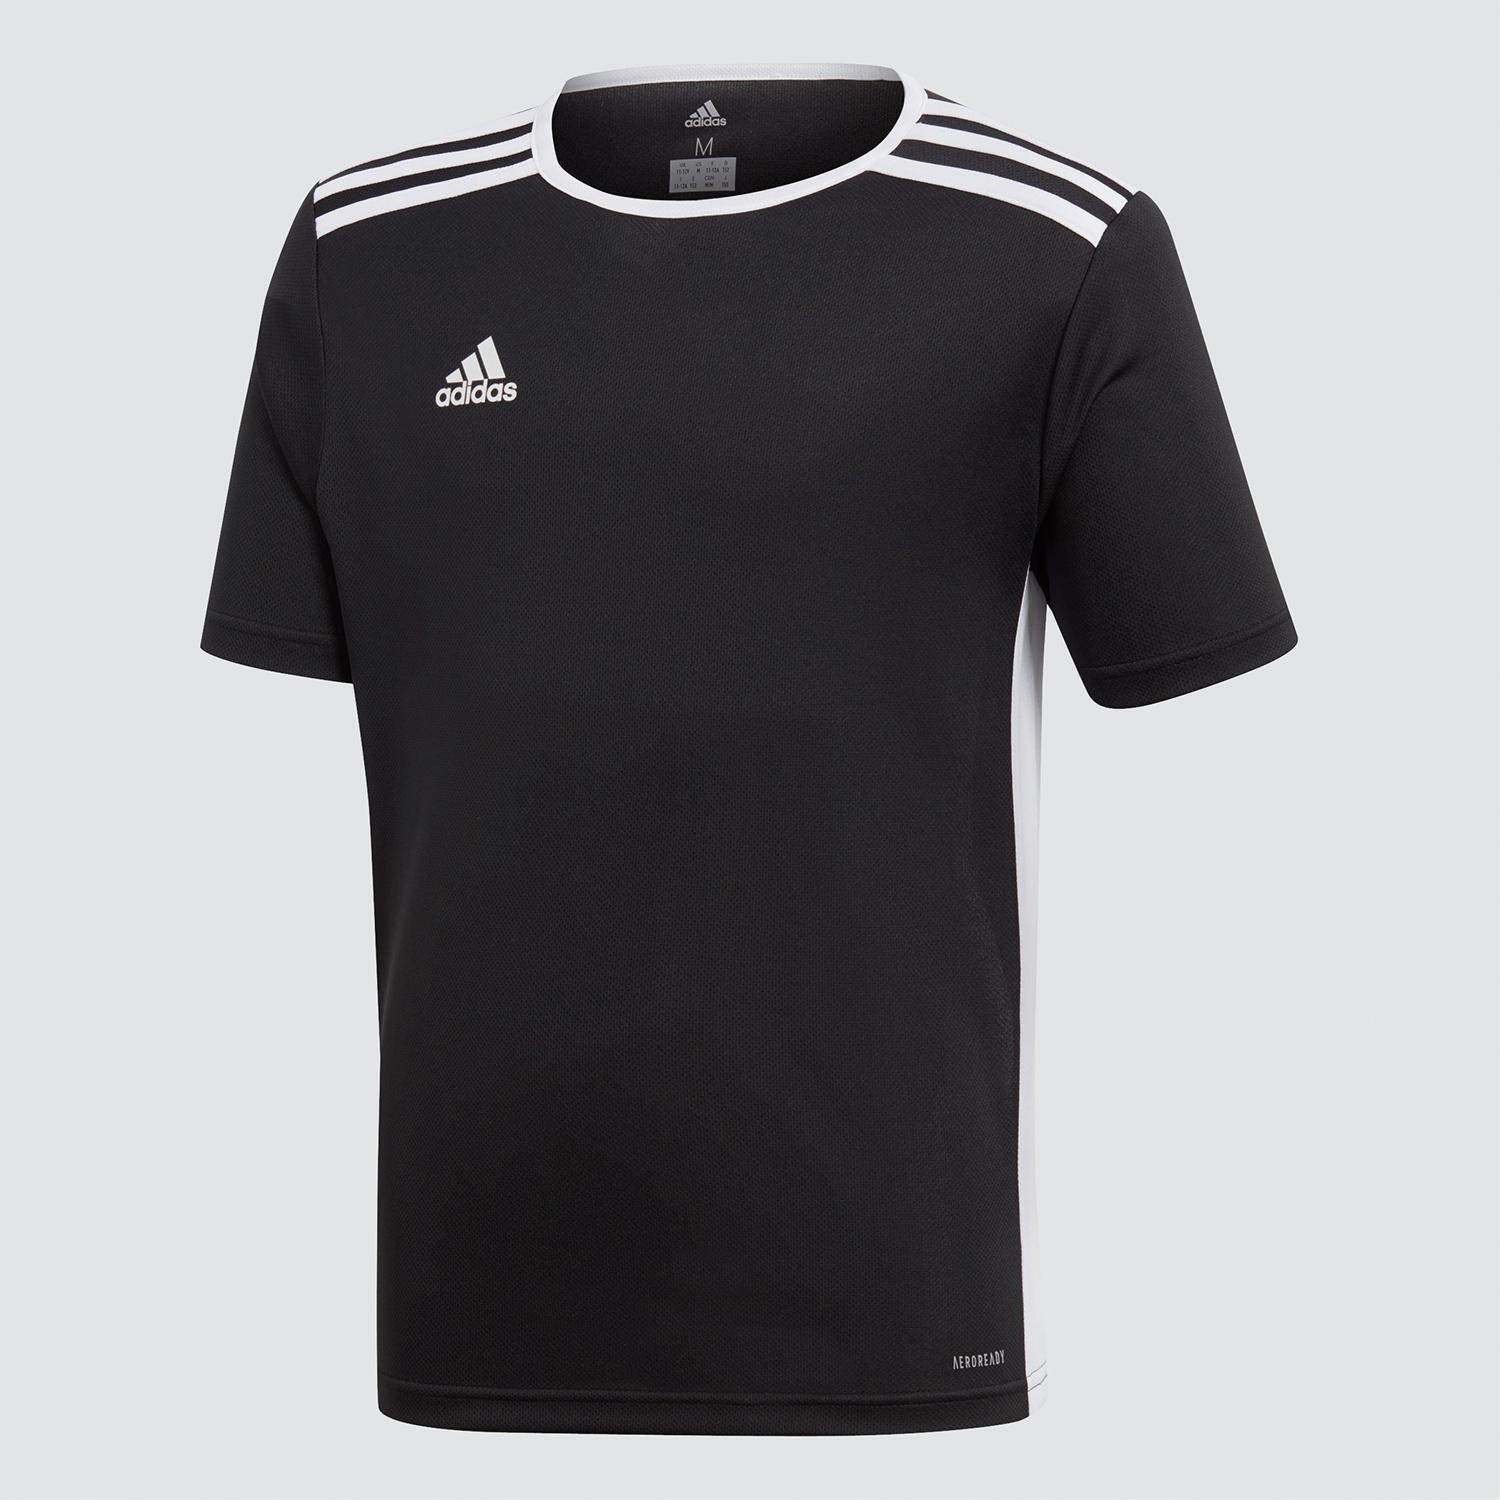 adidas Entrada - Noir - T-shirt Football Garçon sports taille 14